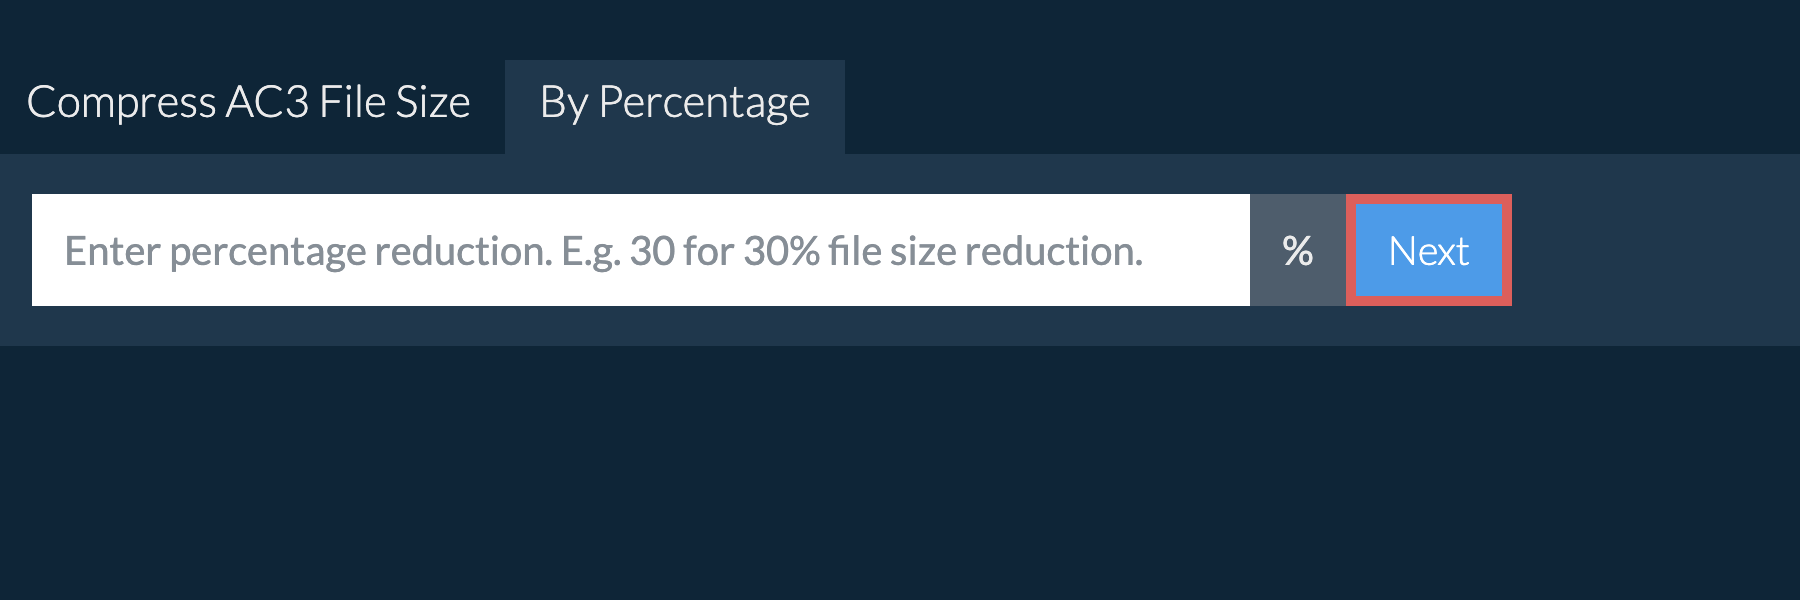 Reduce ac3 By Percentage